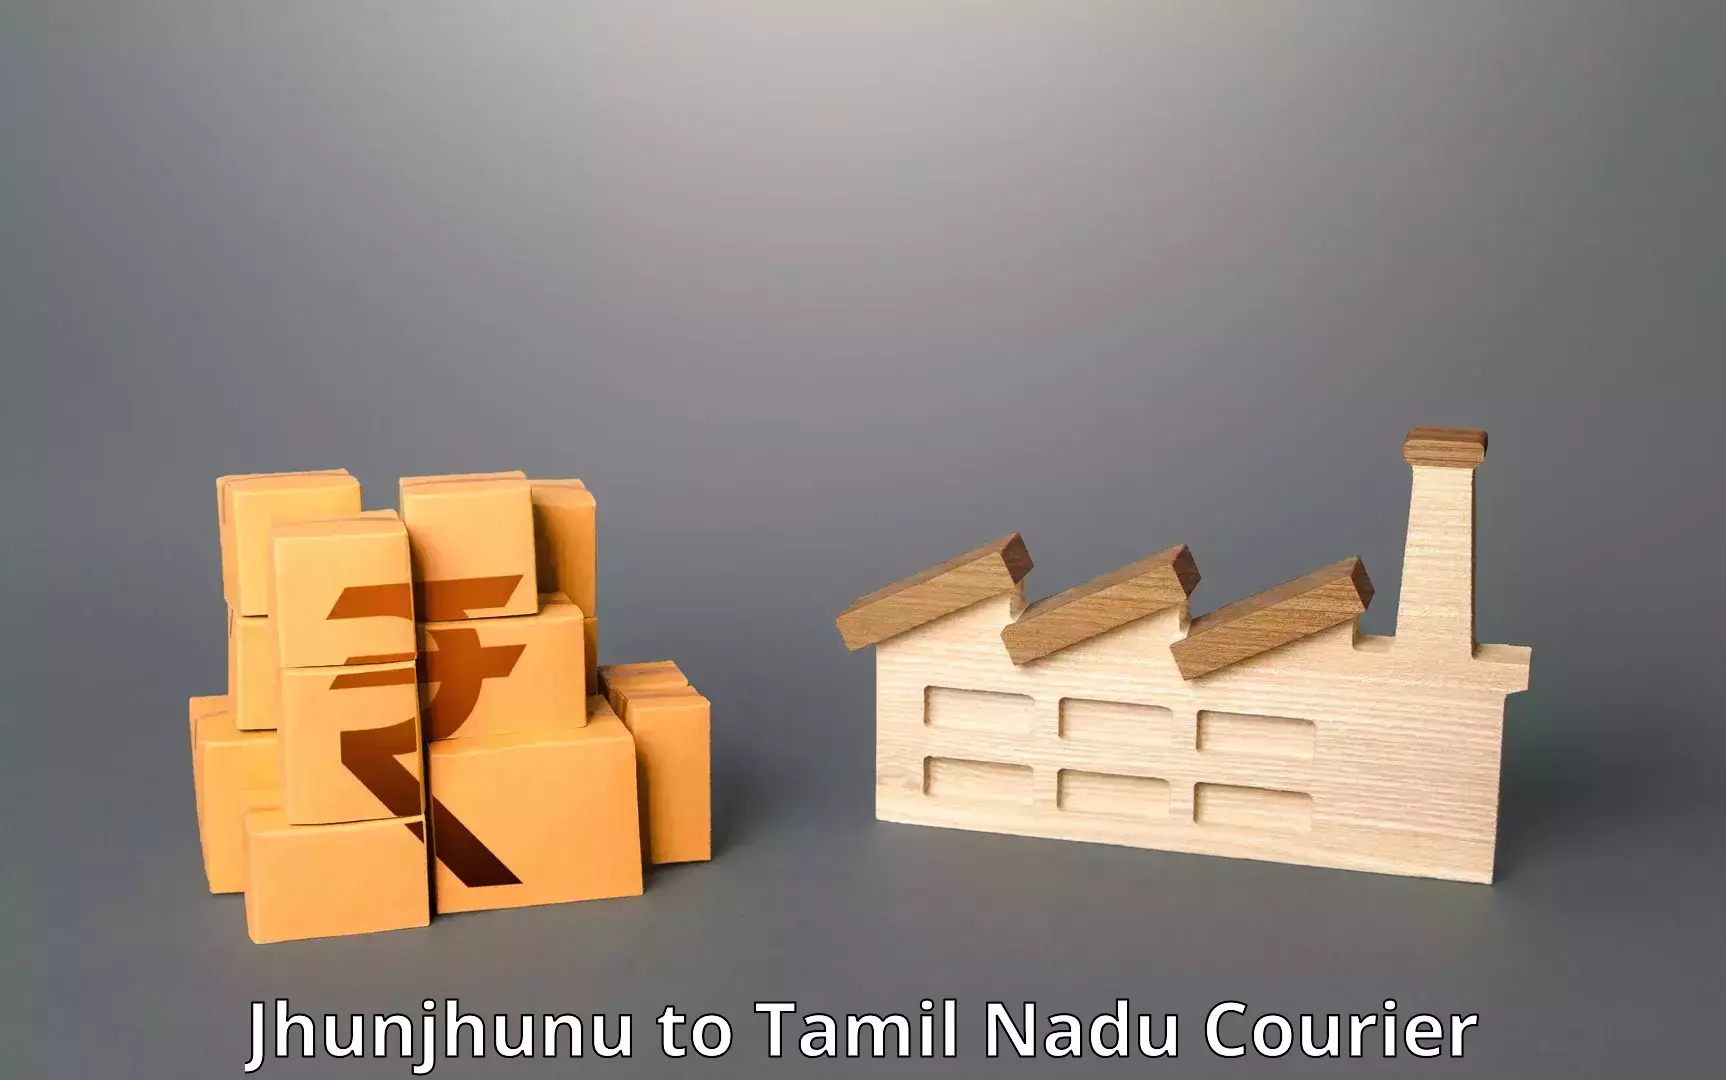 Modern delivery methods Jhunjhunu to Tamil Nadu